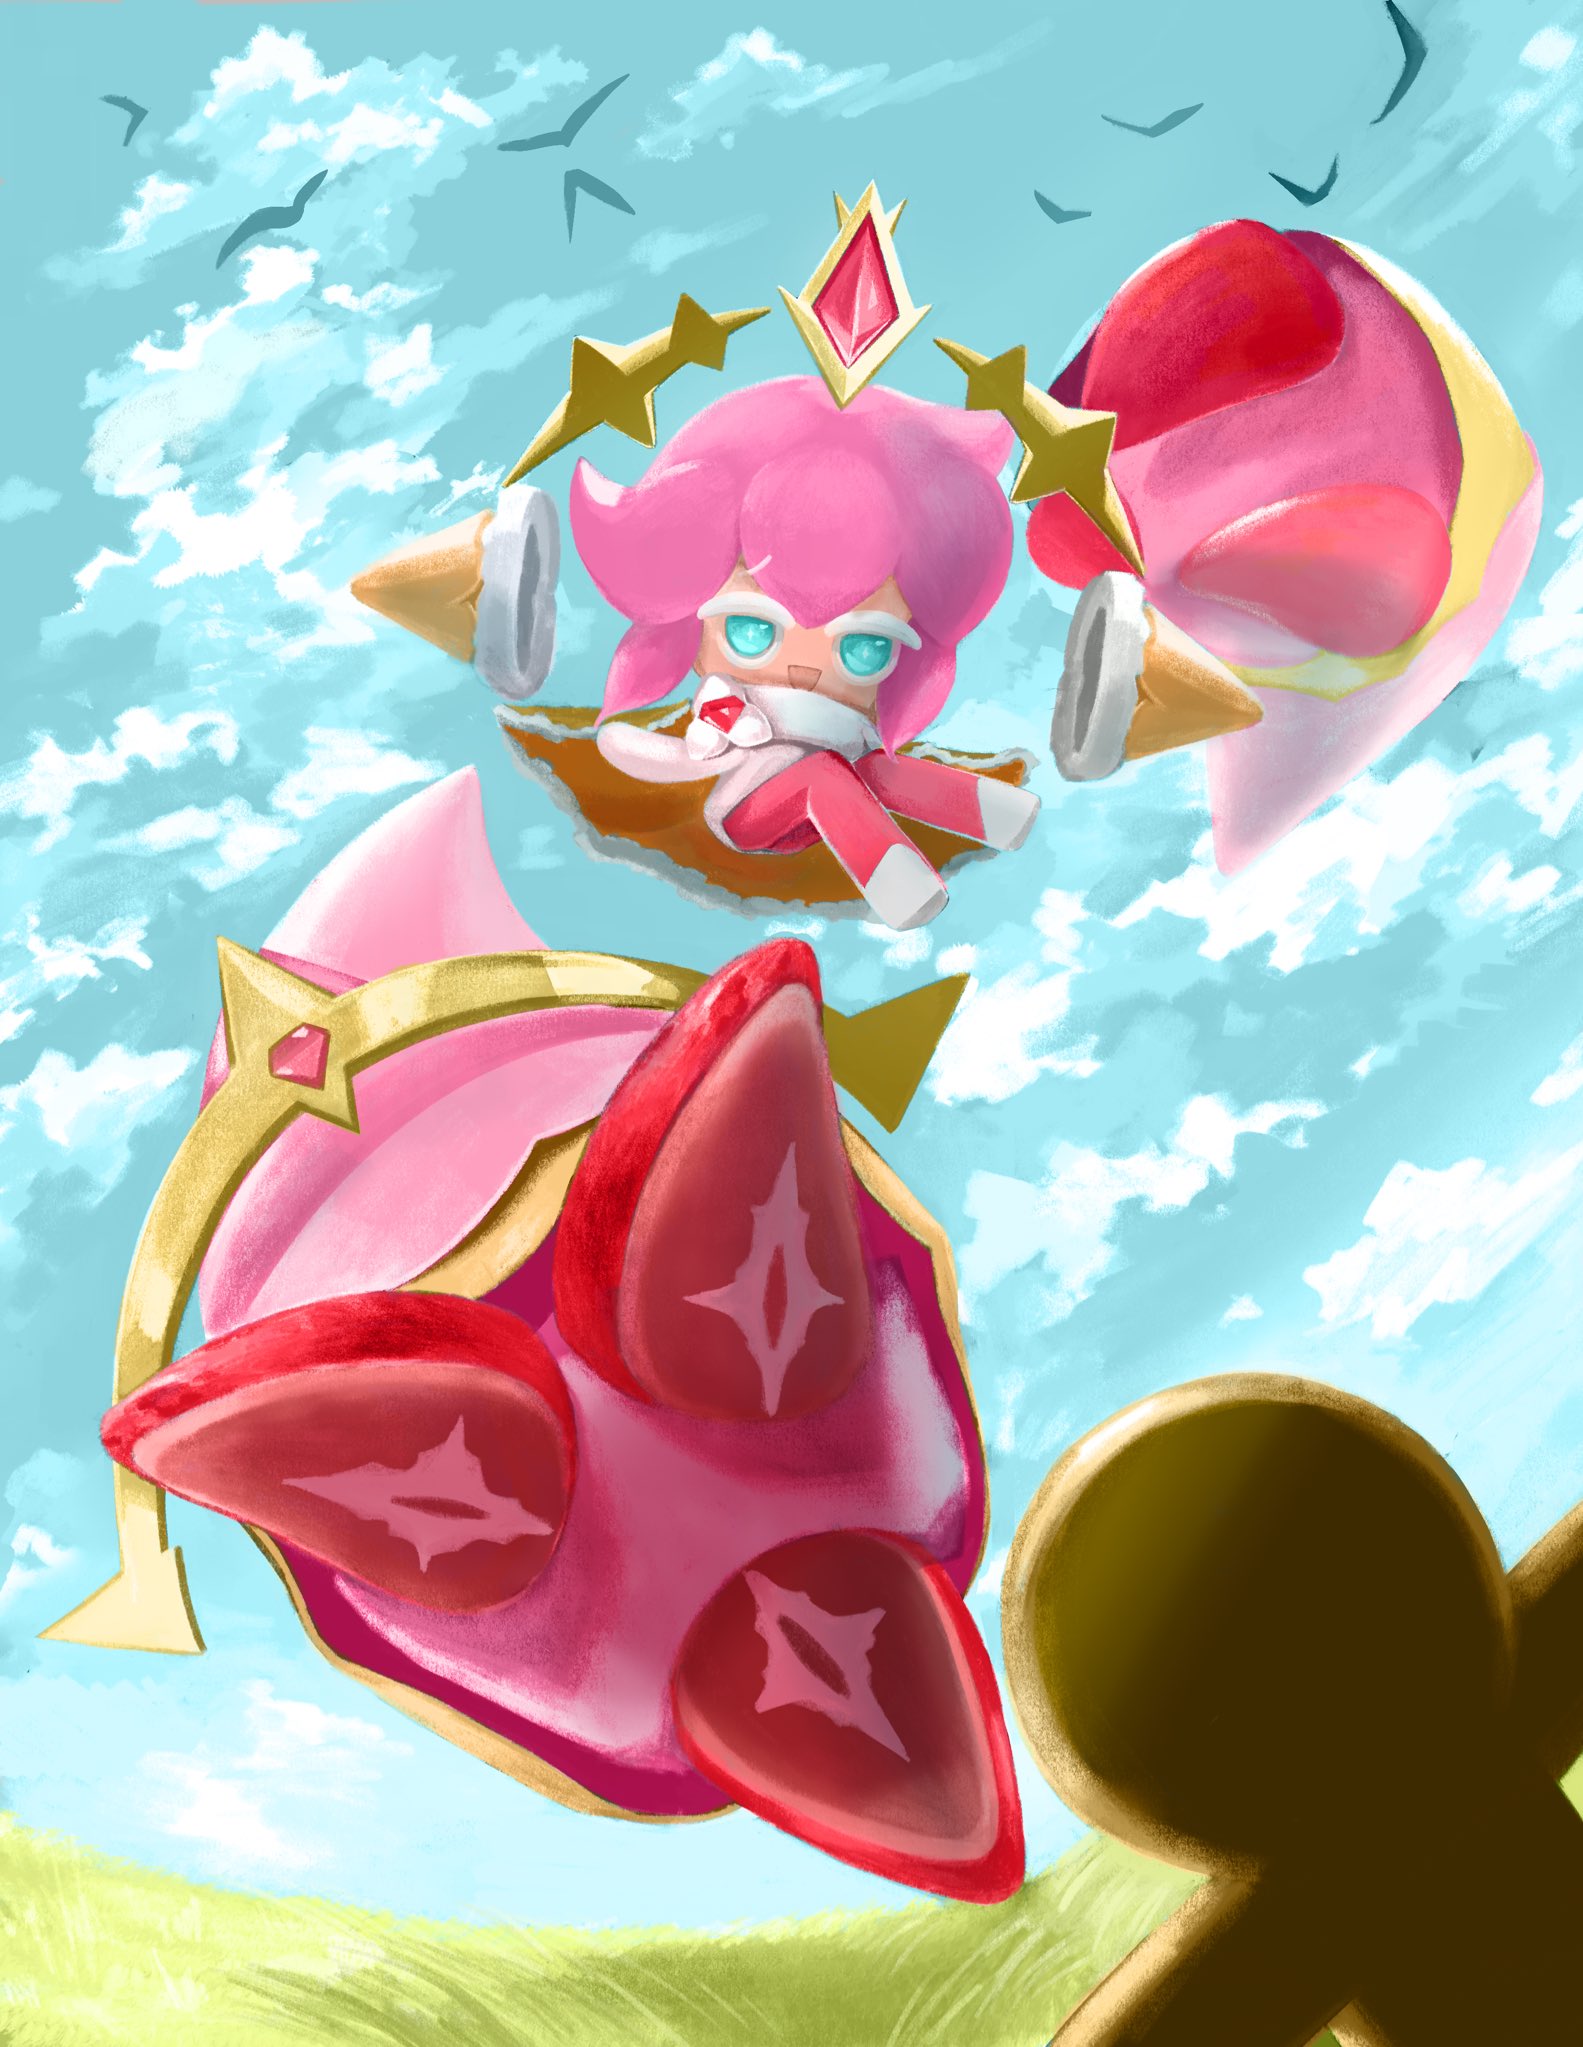 Strawberry Crepe Cookie Run: Kingdom Anime Image Board